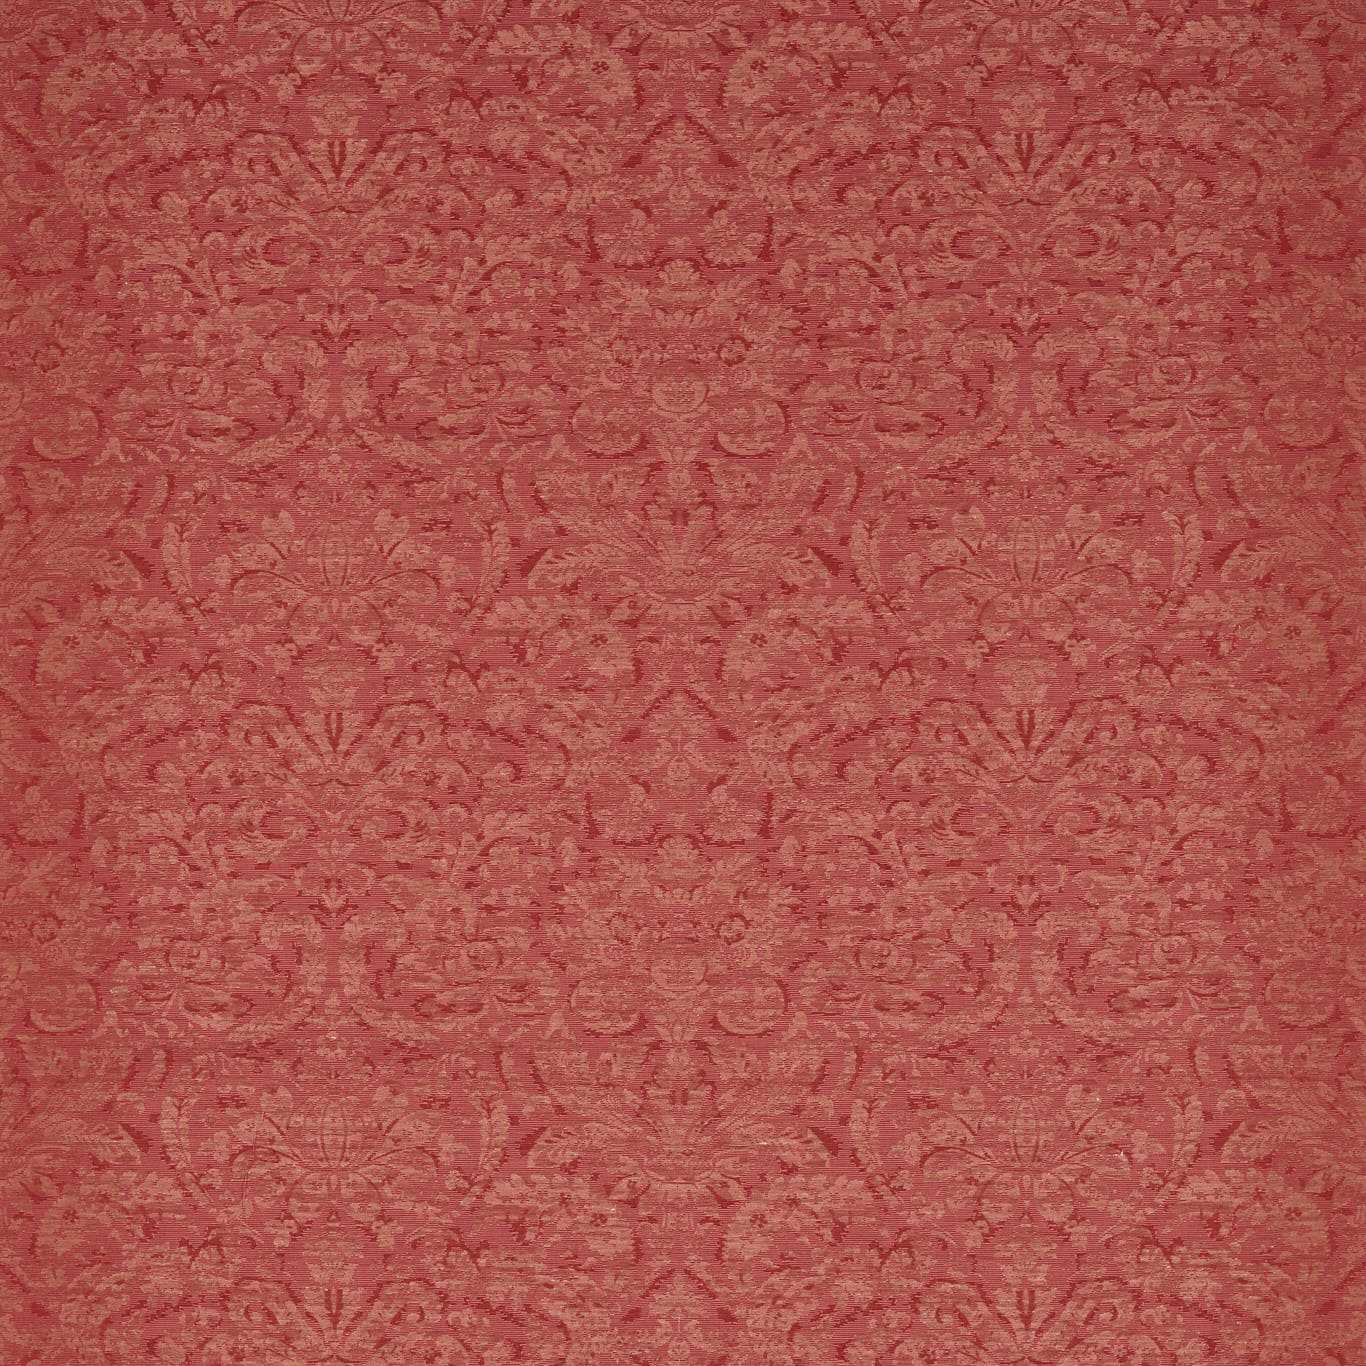 Knole Damask Venetian Red Fabric by ZOF